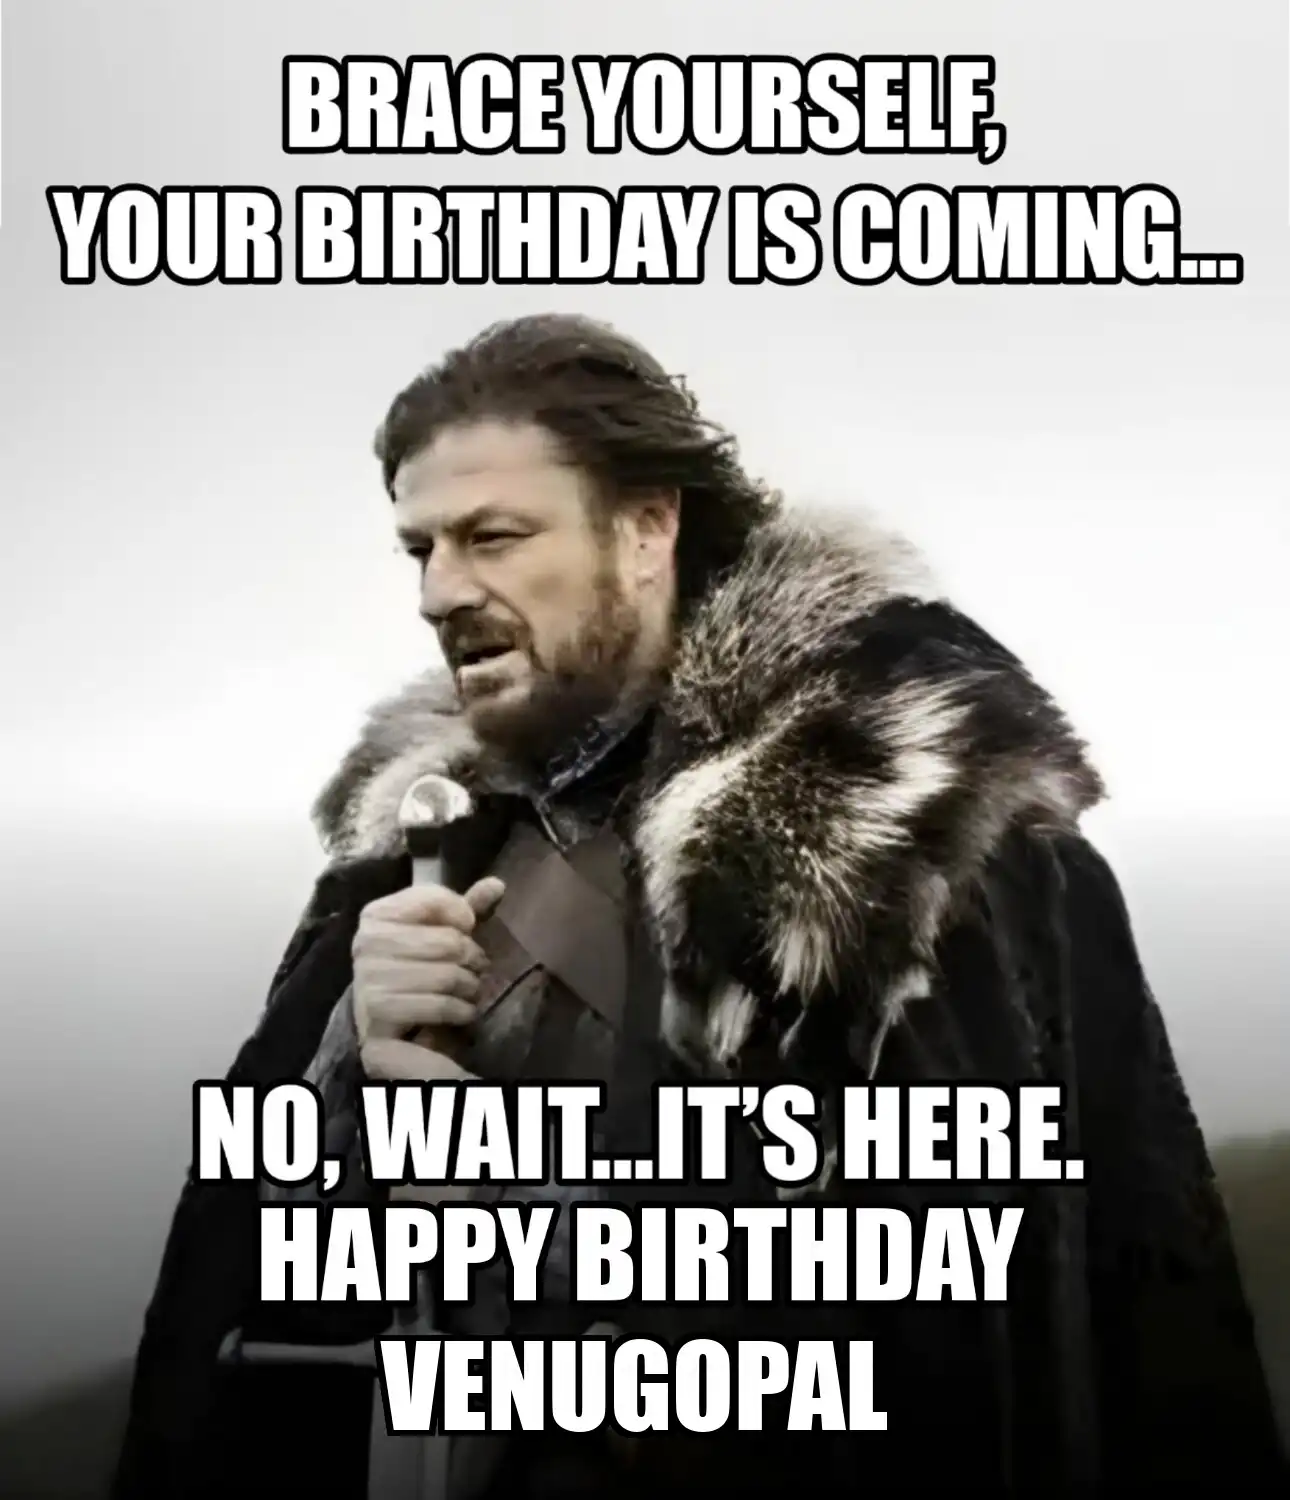 Happy Birthday Venugopal Brace Yourself Your Birthday Is Coming Meme